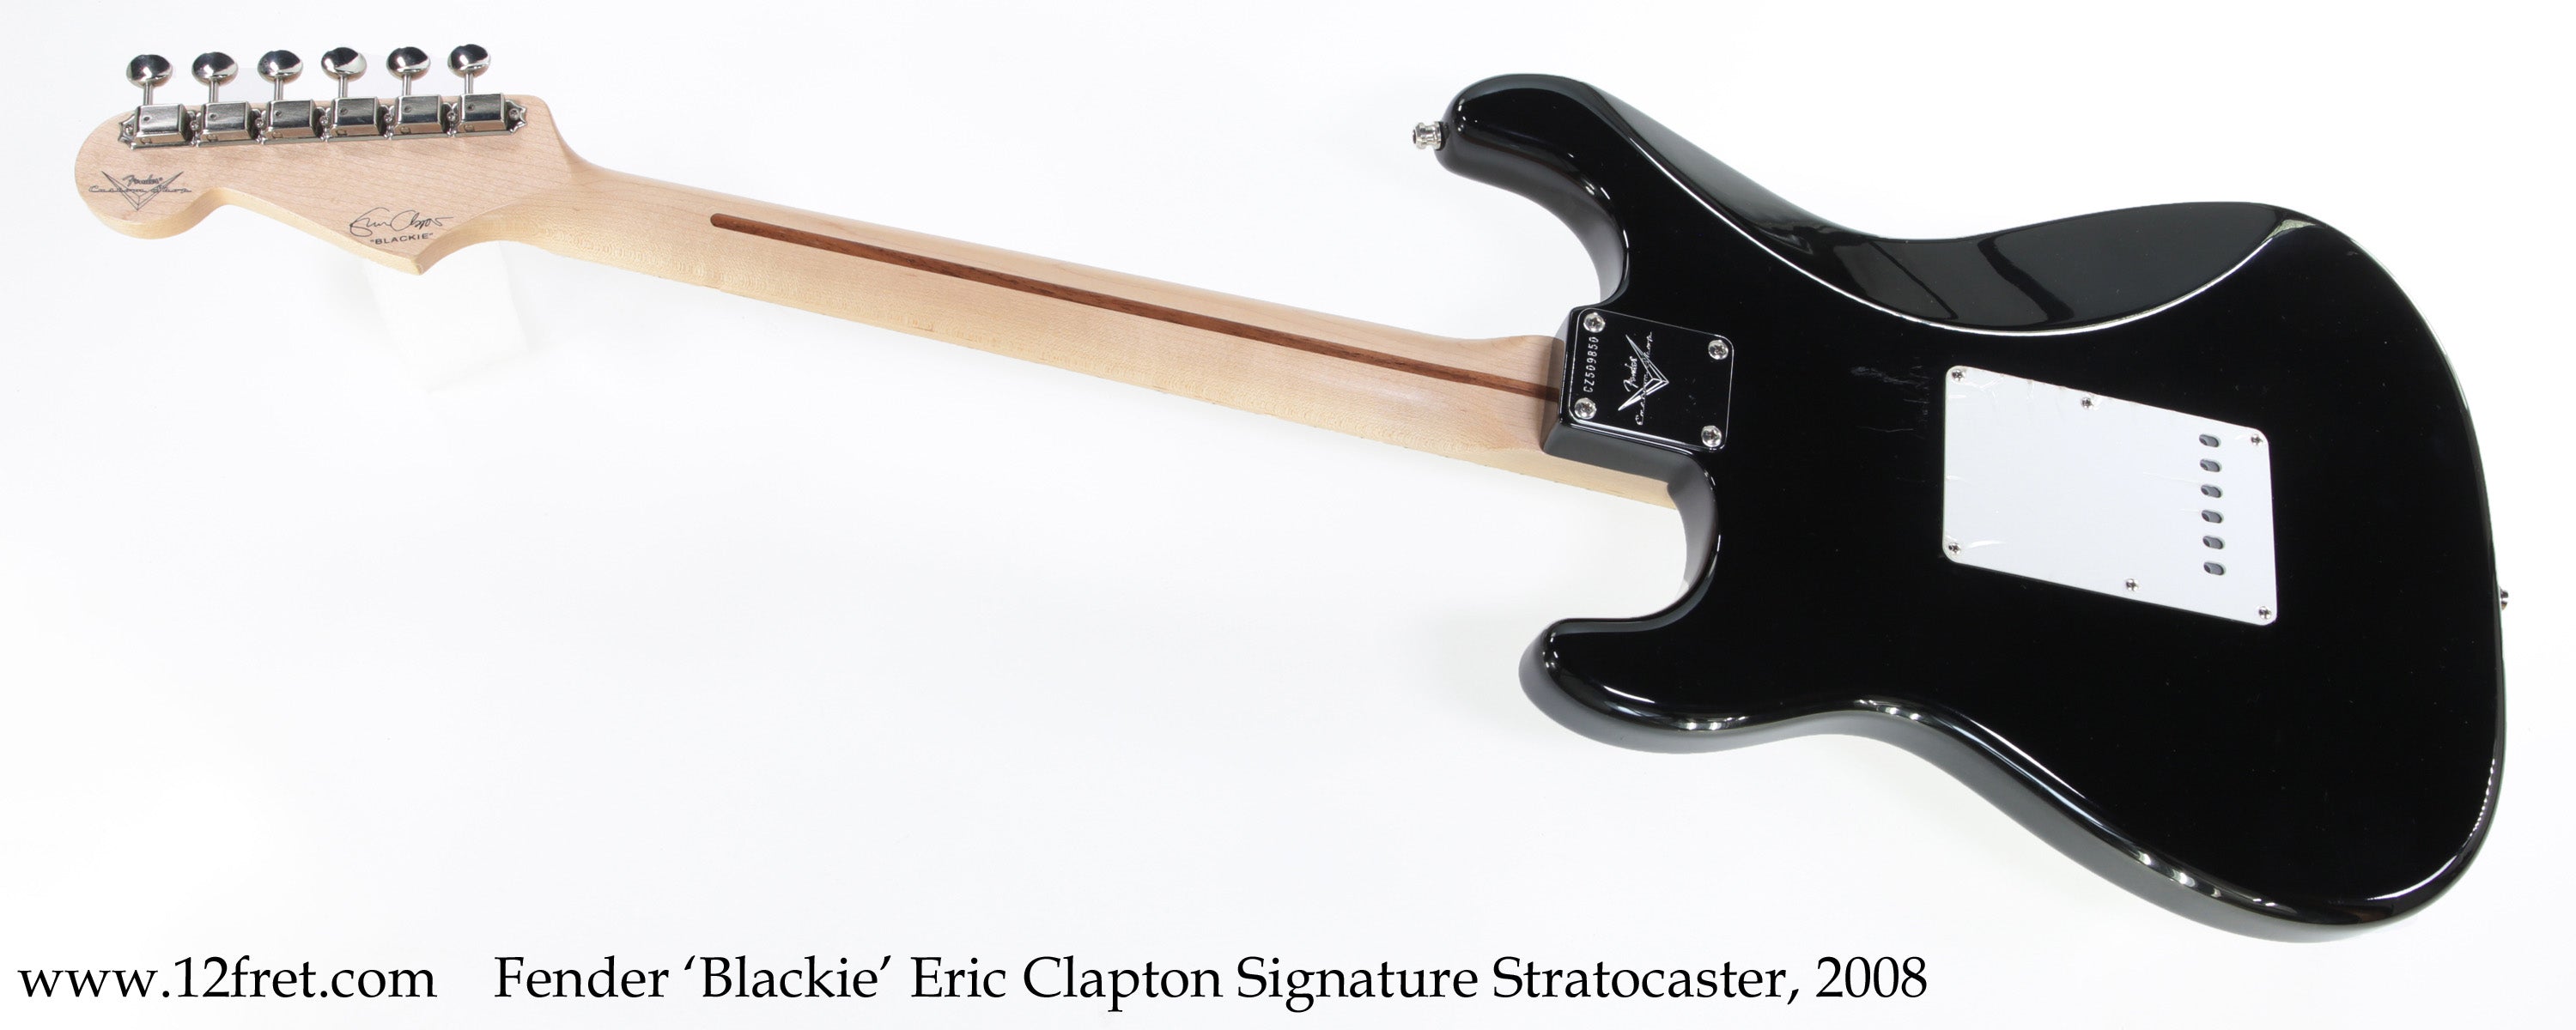 Fender Custom Shop 'Blackie' Eric Clapton Signature Stratocaster, 2008 - The Twelfth Fret